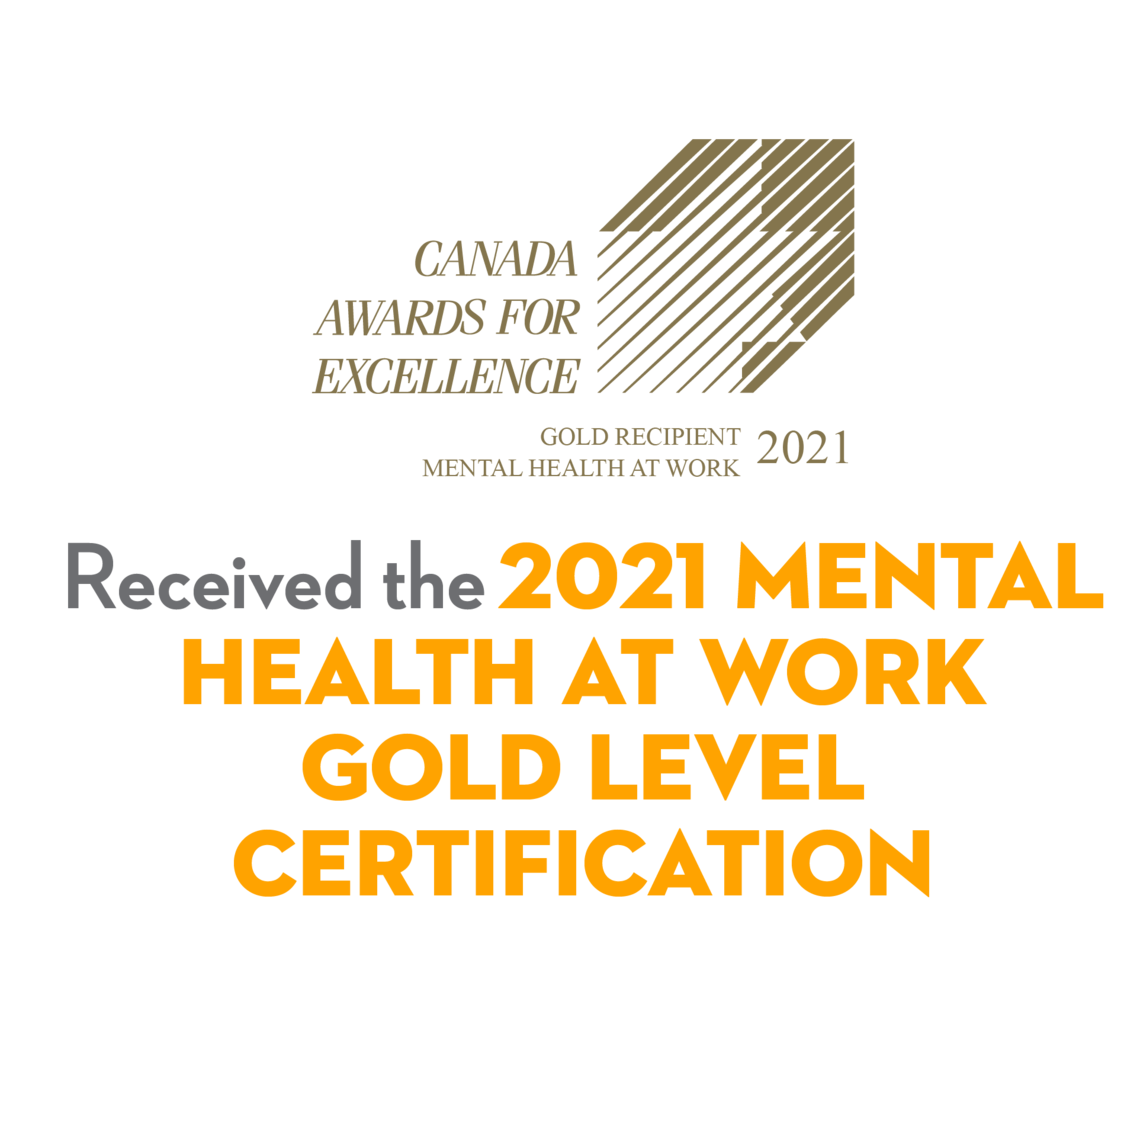 2021 Award for mental health at work